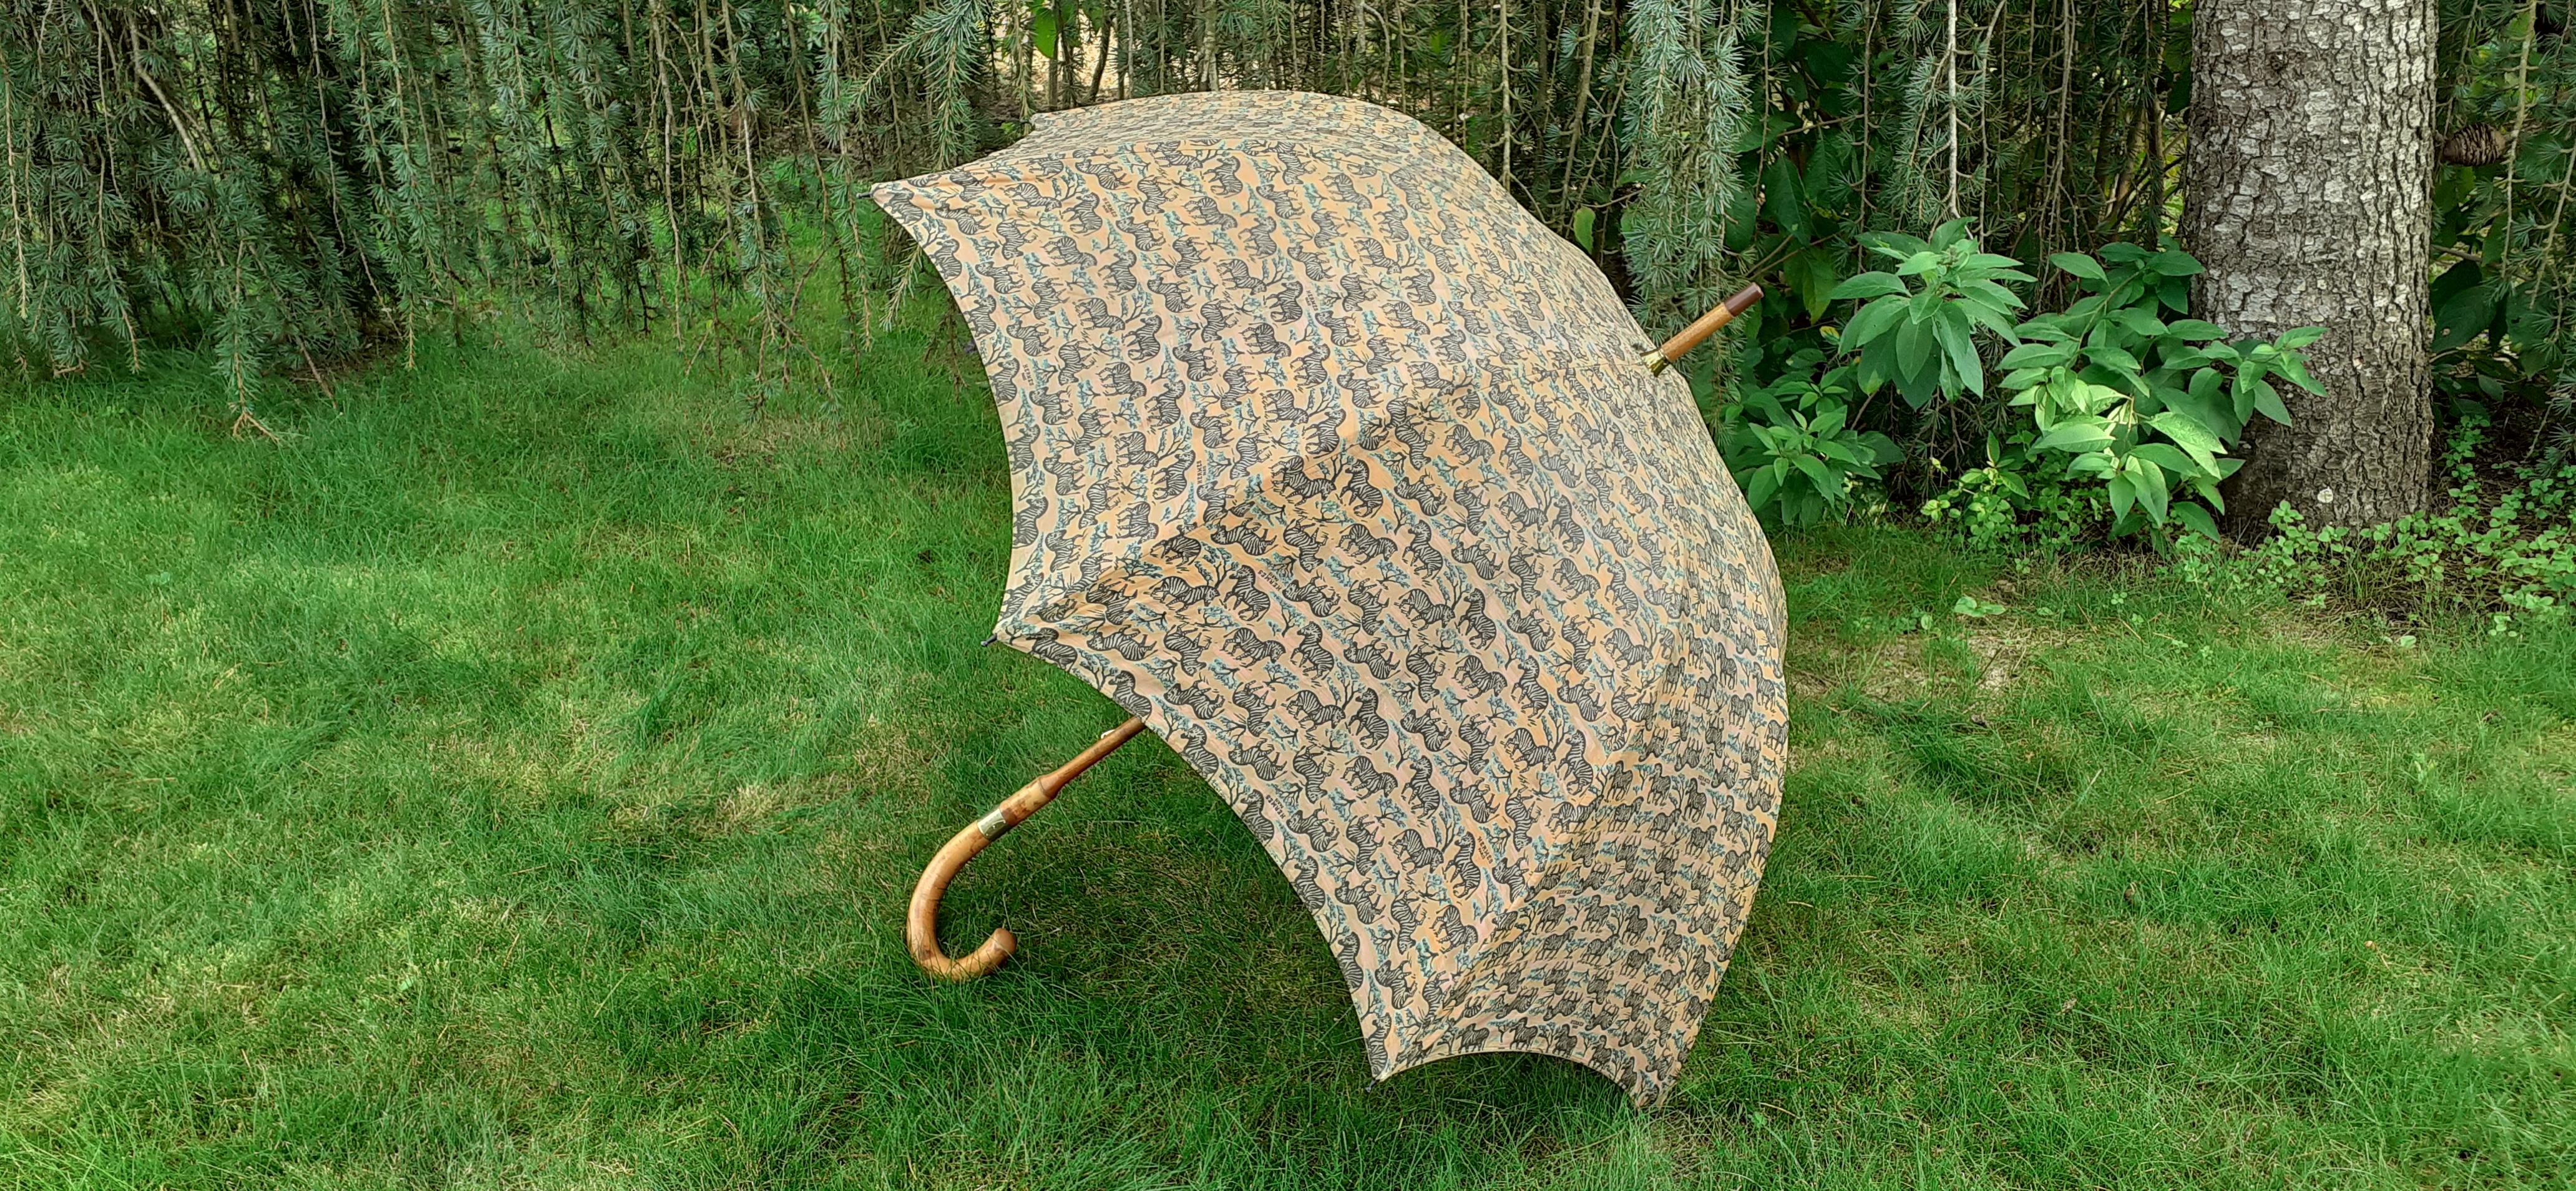 Hermes Umbrella - 4 For Sale on 1stDibs | hermes umbrella price 